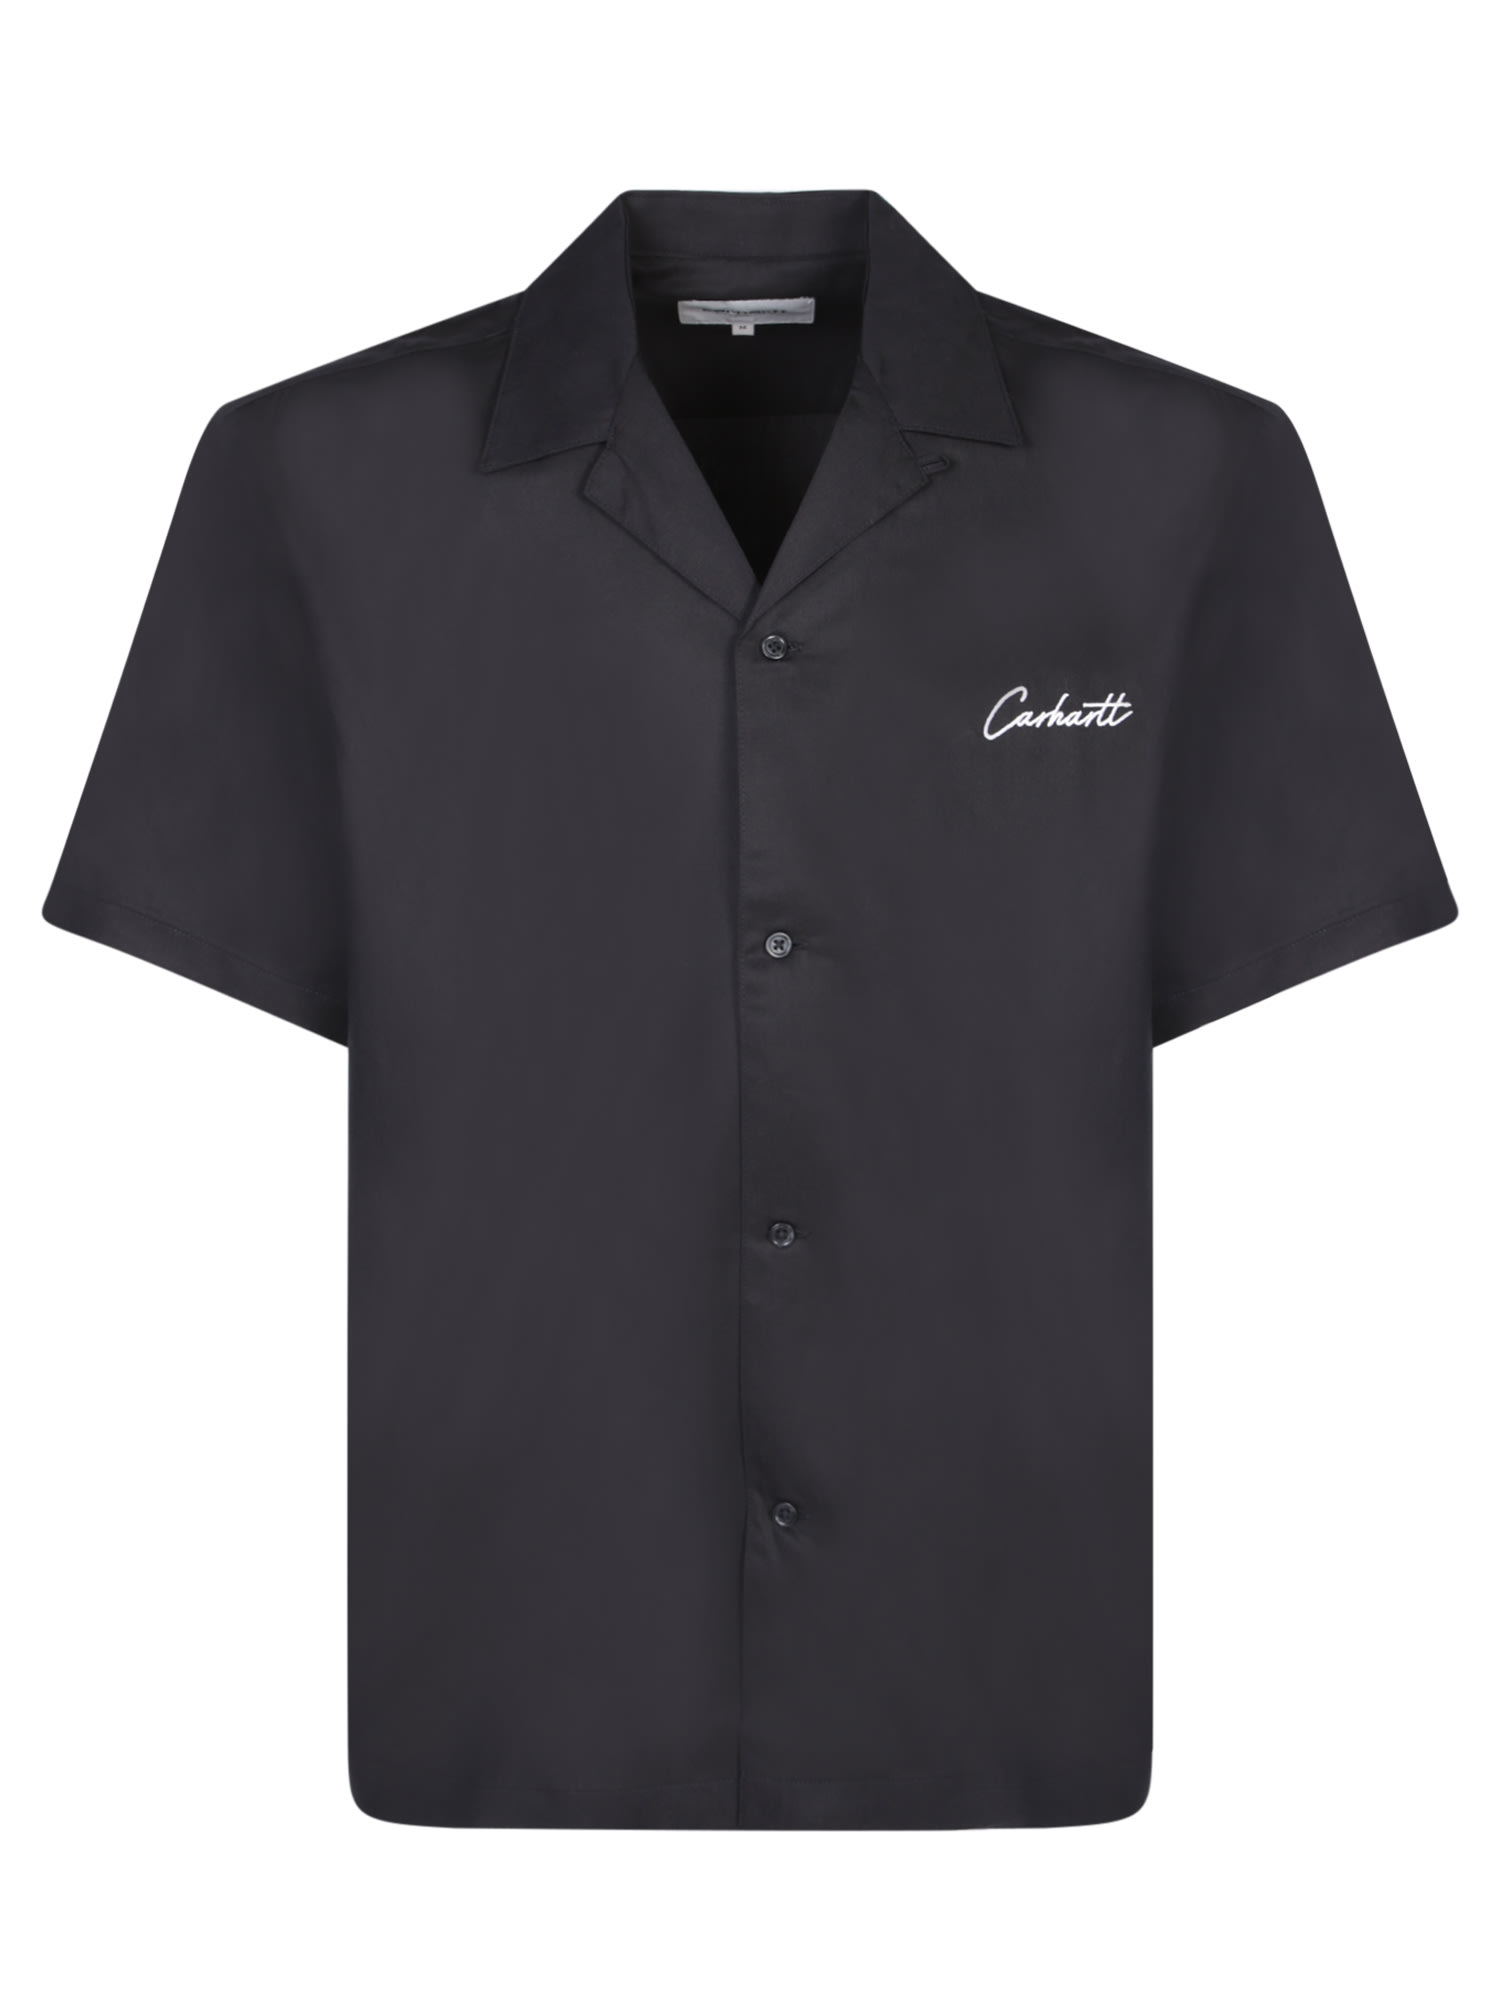 Shop Carhartt Delray Black Shirt